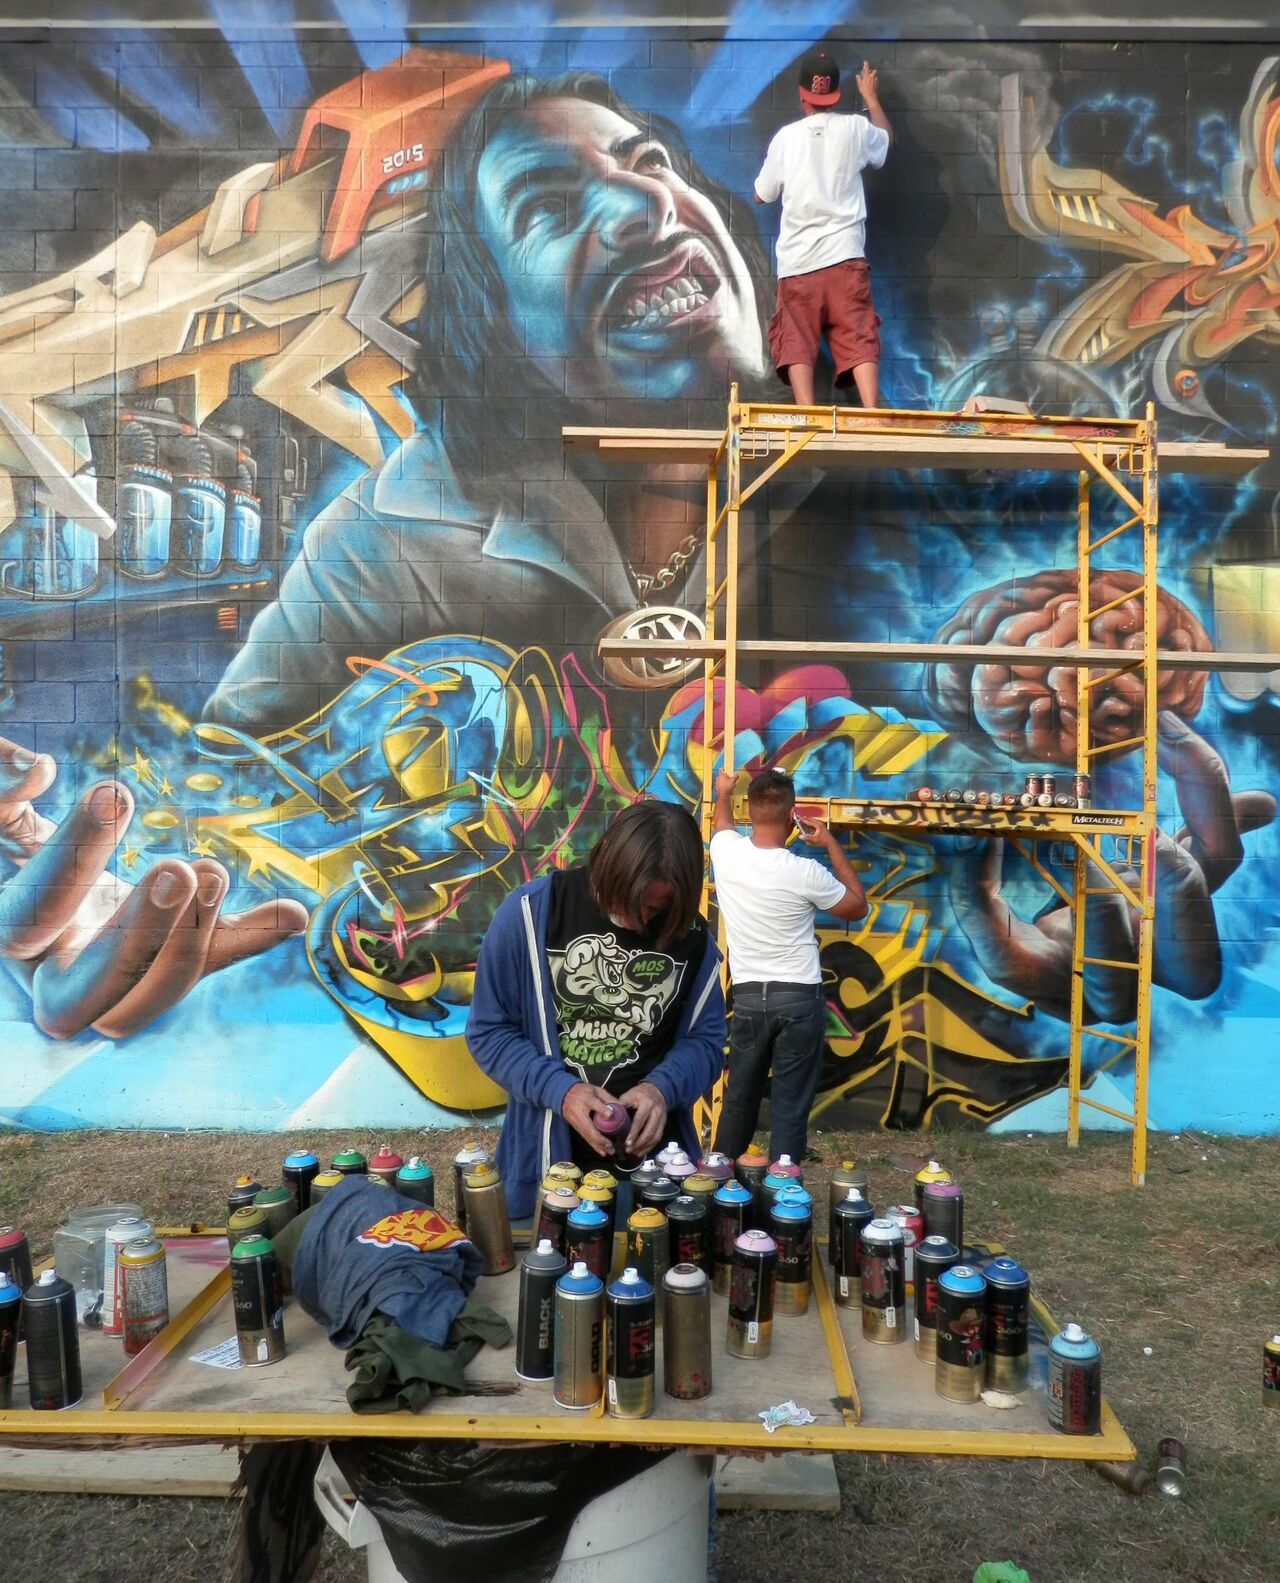 #Houston #Graffiti #Streetart Koka & Rejak brought their artist buddies from Mexico City ... lots of talent. https://t.co/uwsTaiZTor